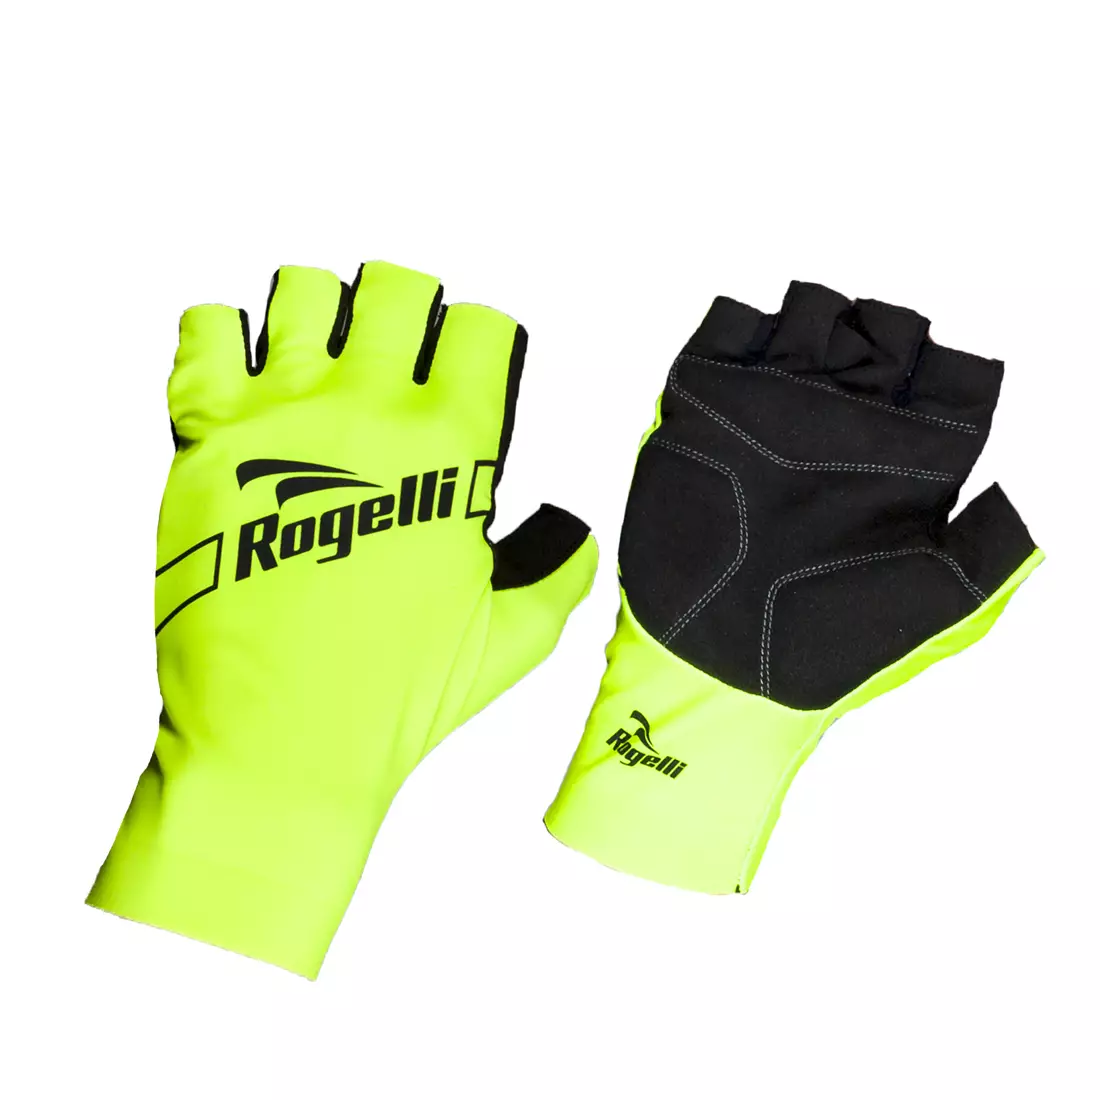 ROGELLI BIKE LOGAN 006.342 men's cycling gloves, fluorine